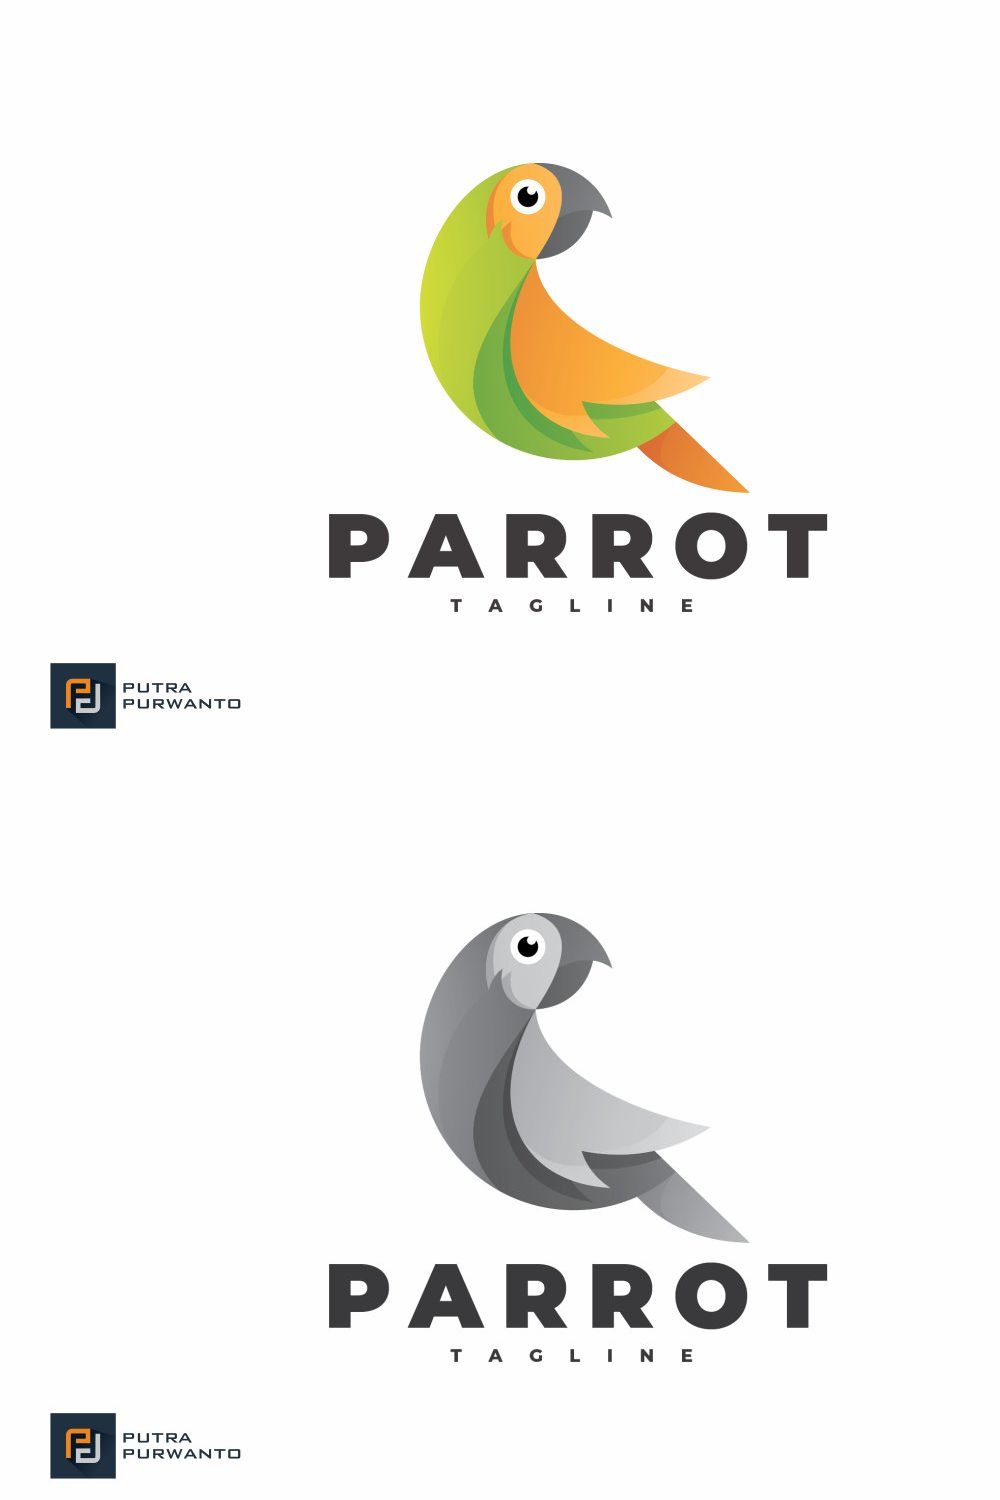 Parrot - Logo Template pinterest preview image.